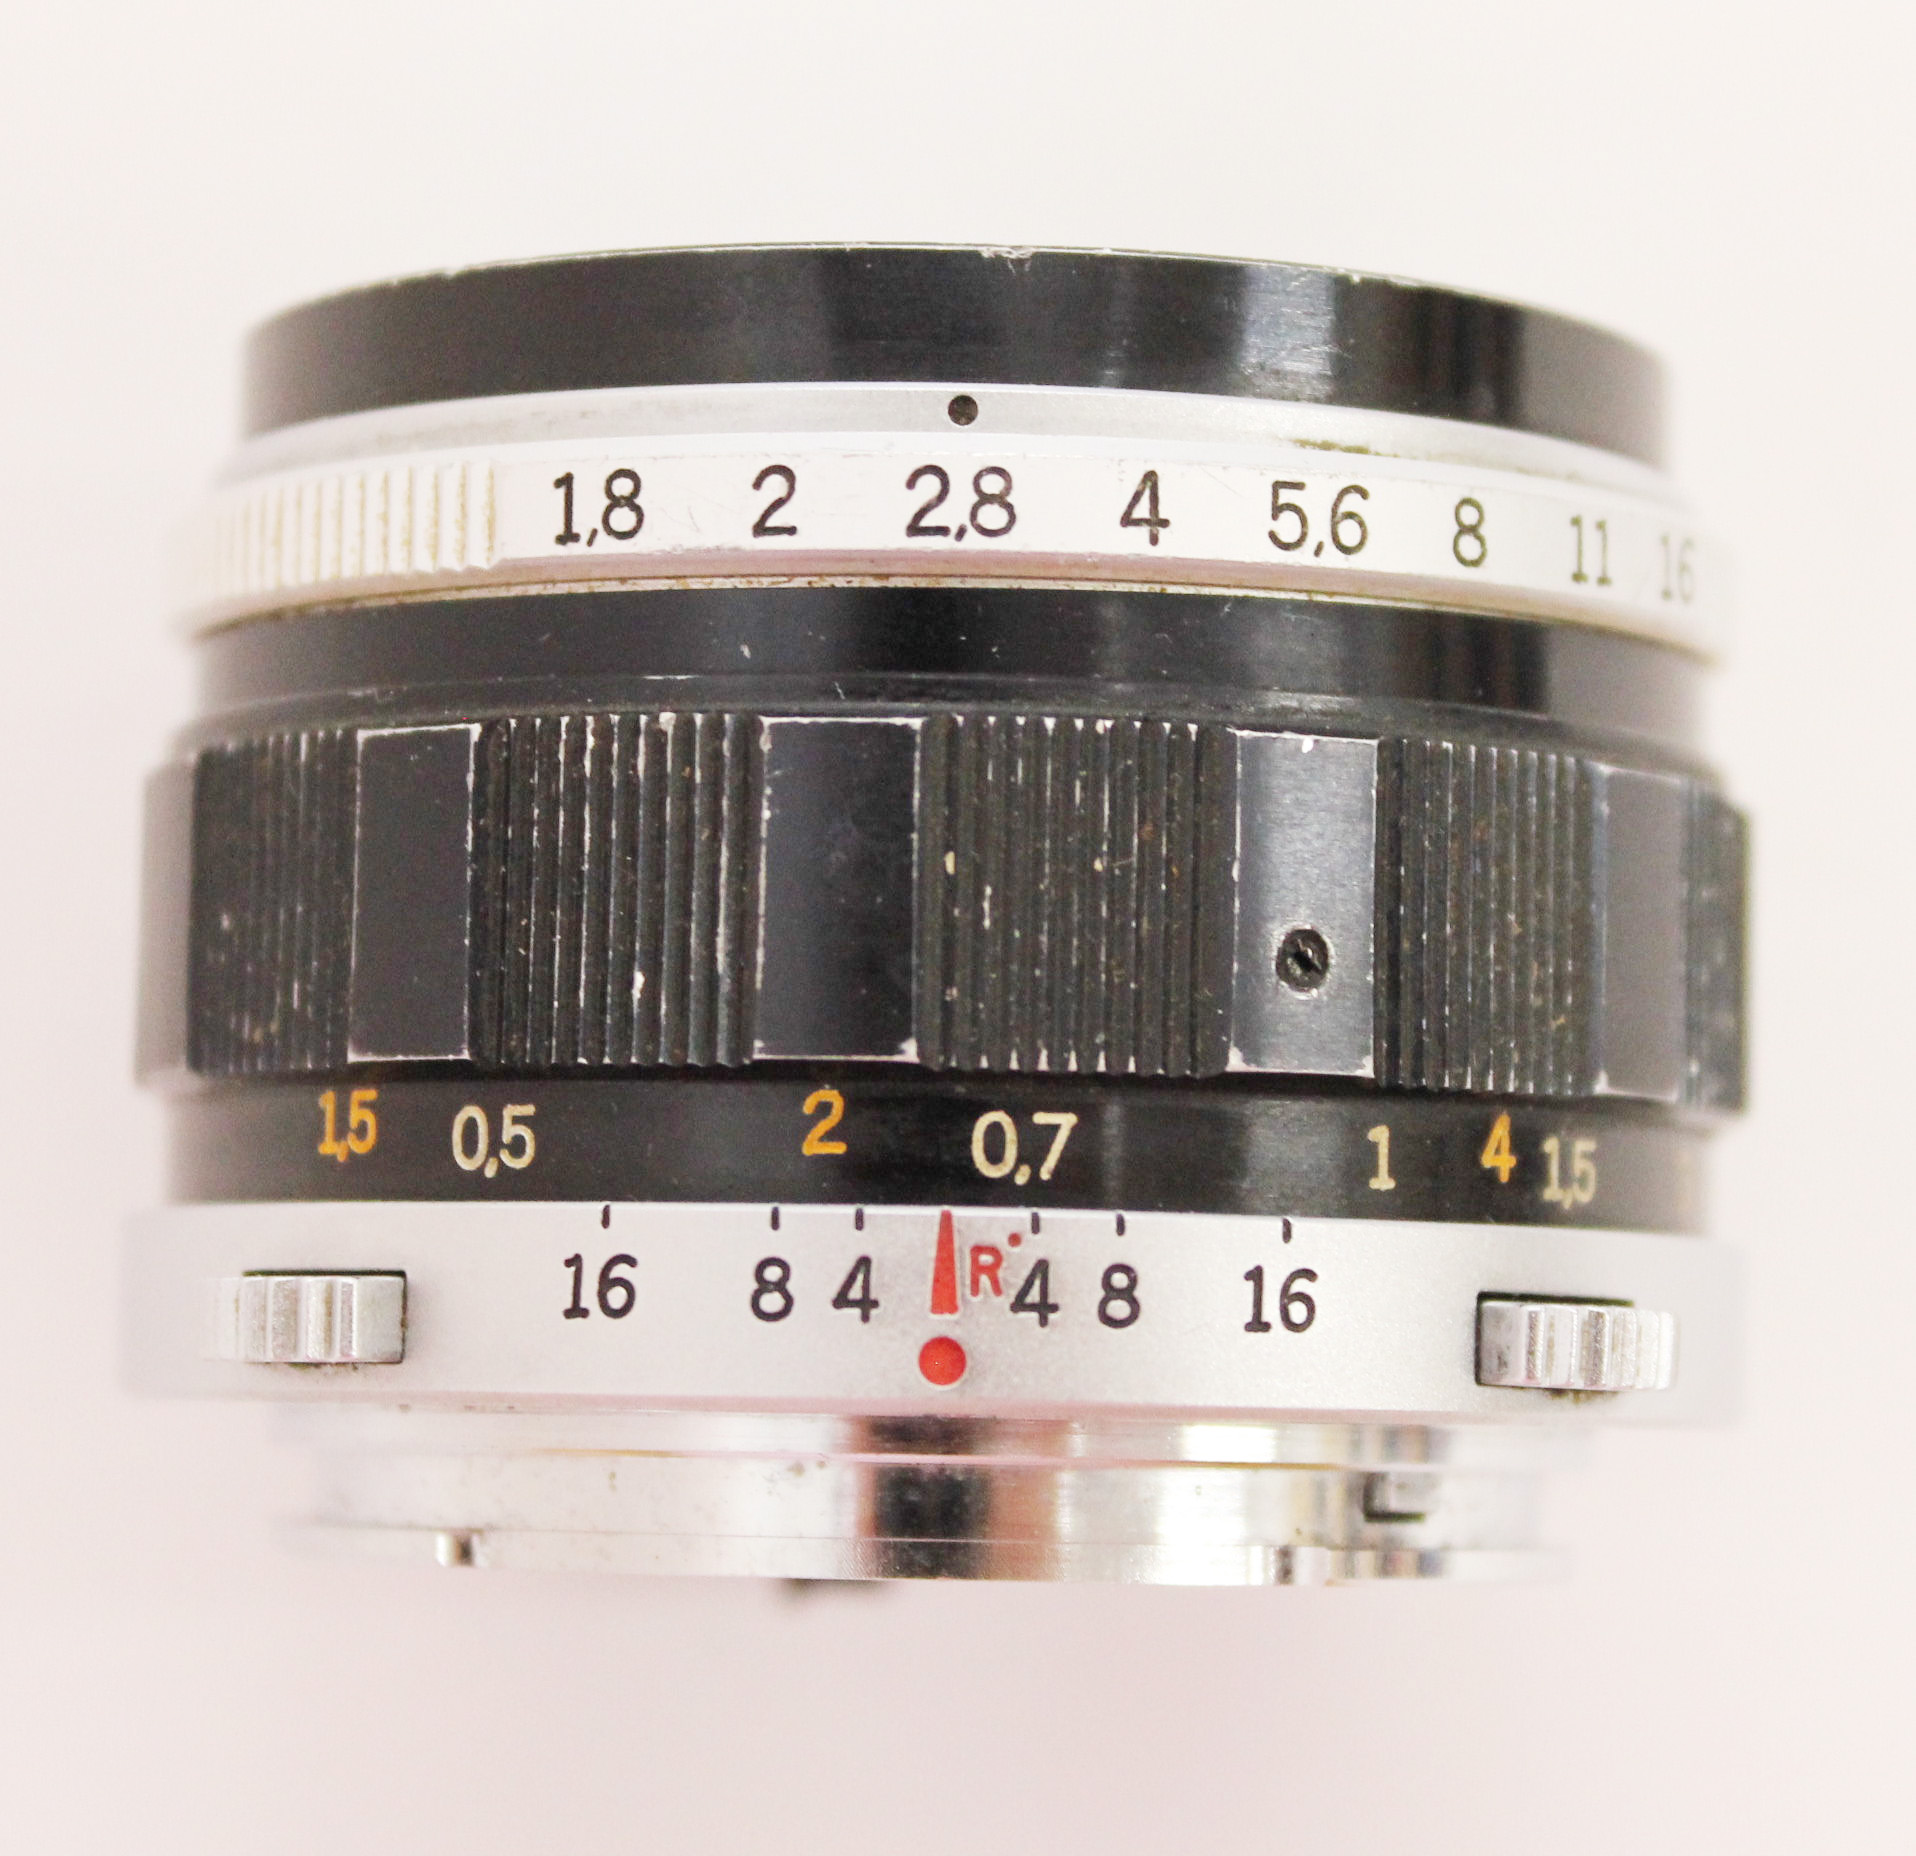 Olympus Pen FT Half Frame Film Camera Body with F.Zuiko Auto-S